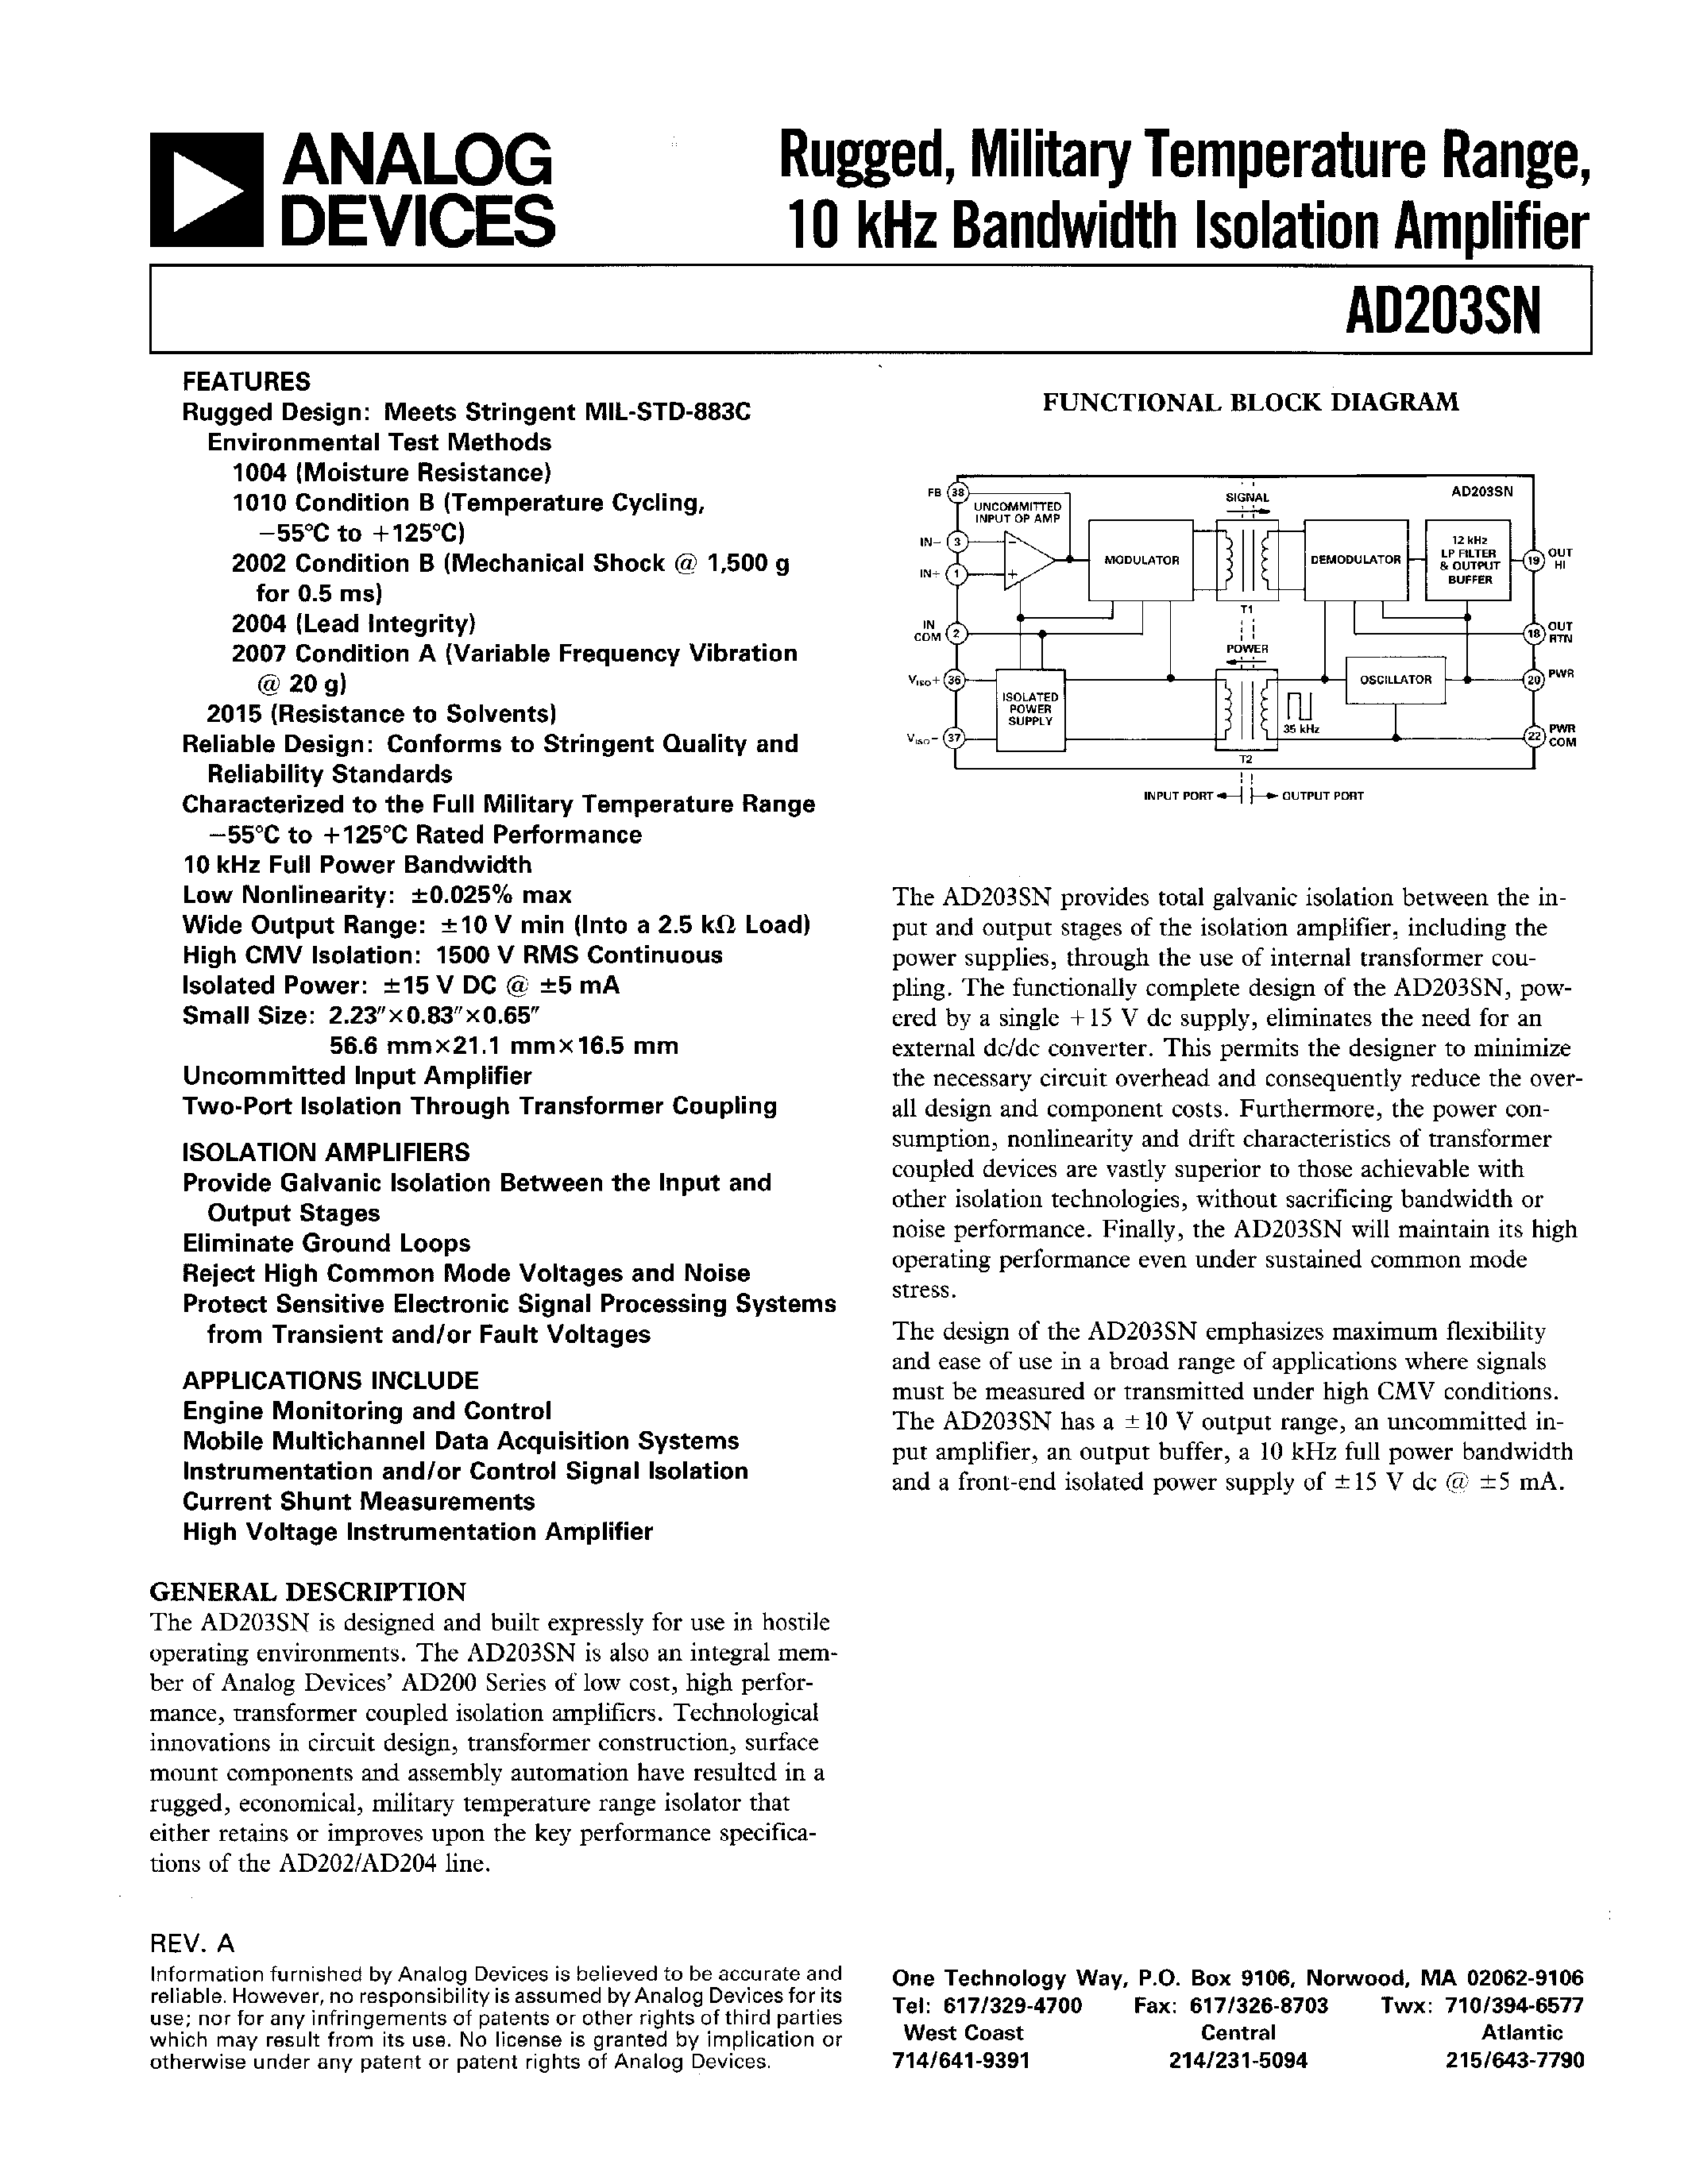 Datasheet AD203SN - Rugged/ Military Temperature Range/ 10 kHz Bandwidth Isolation Amplifier page 1